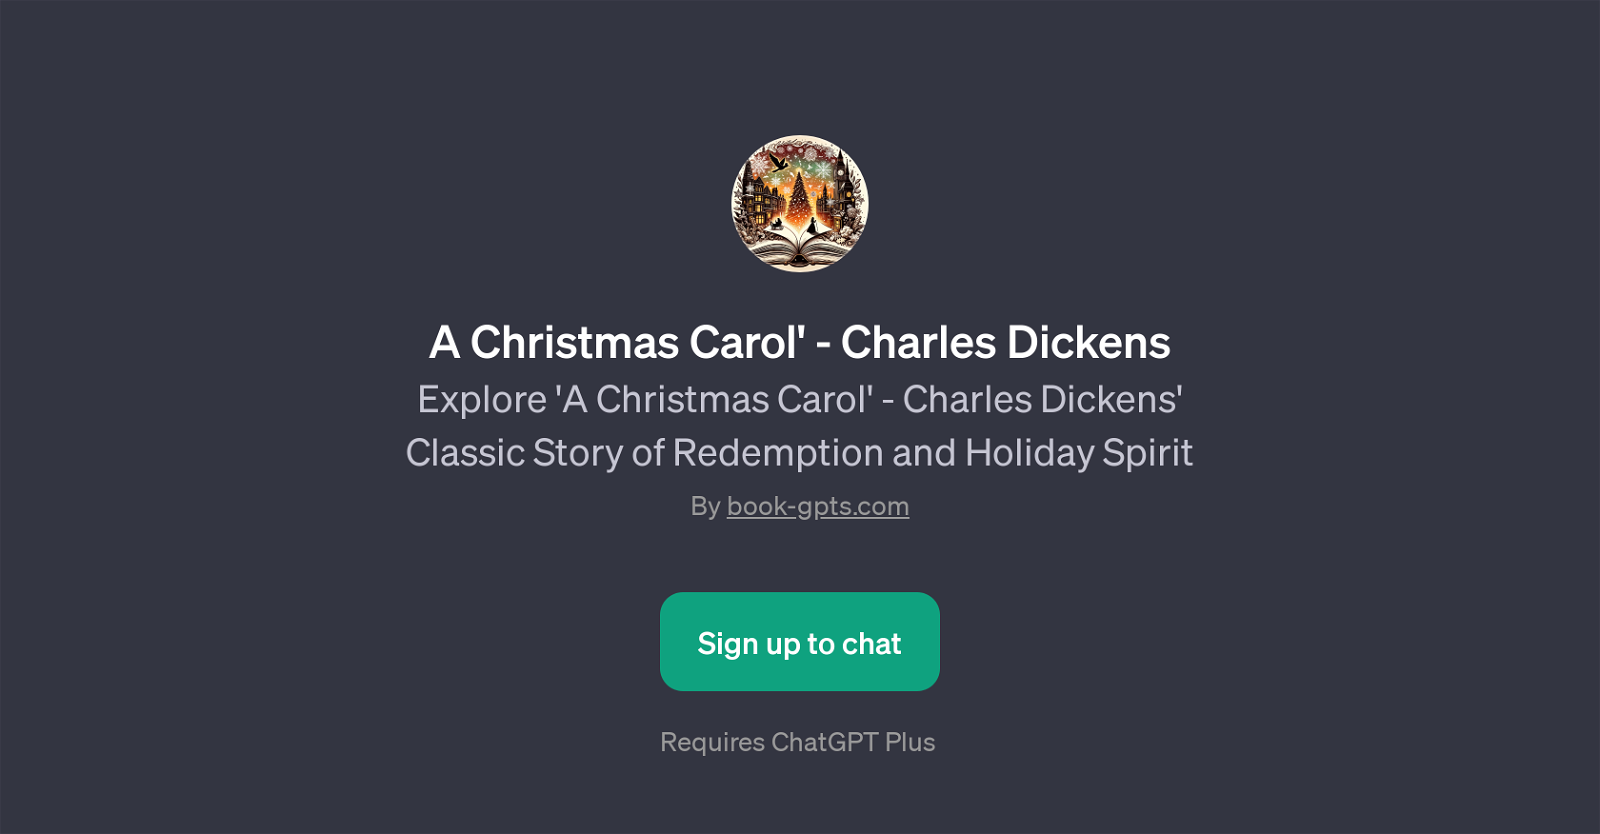 A Christmas Carol - Charles Dickens GPT website